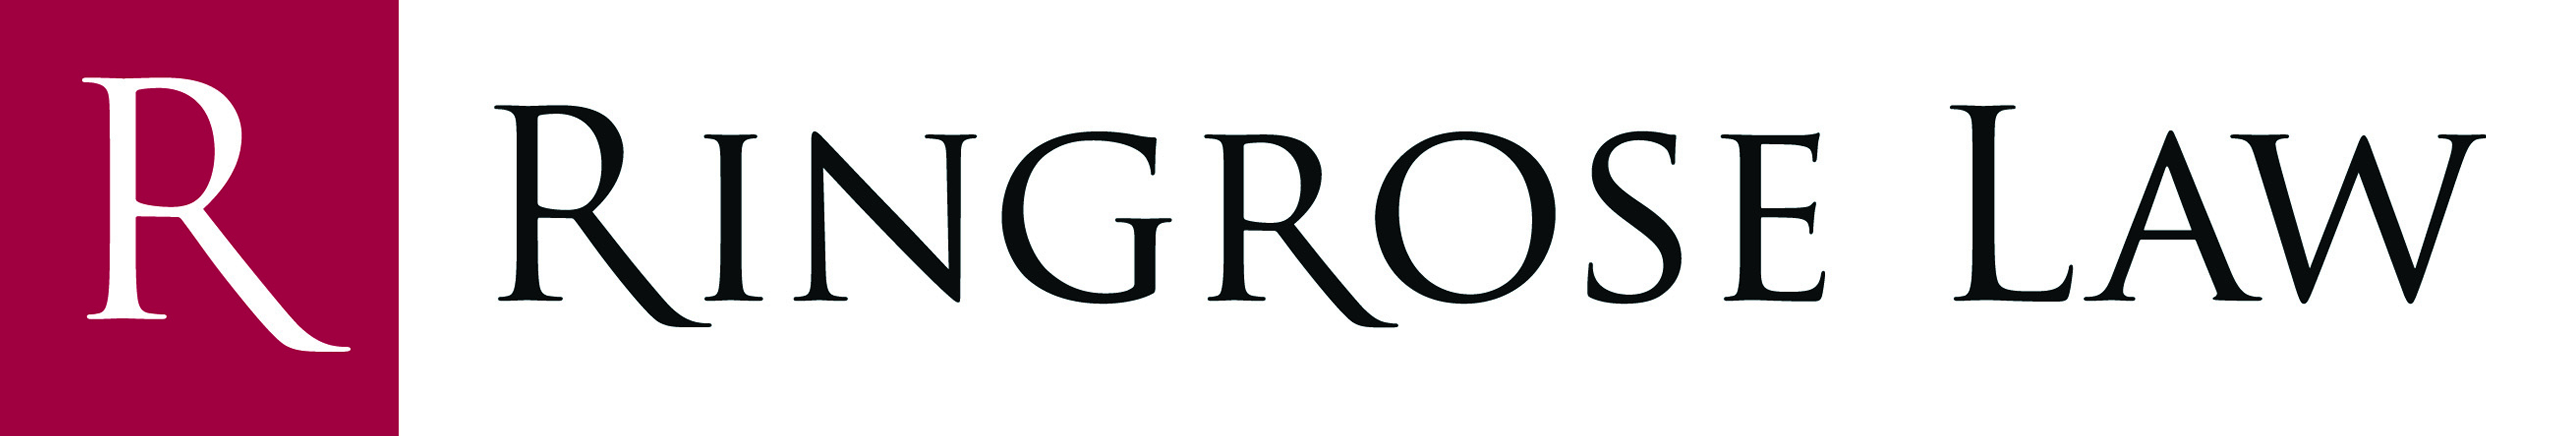 Ringrose Law Company Logo